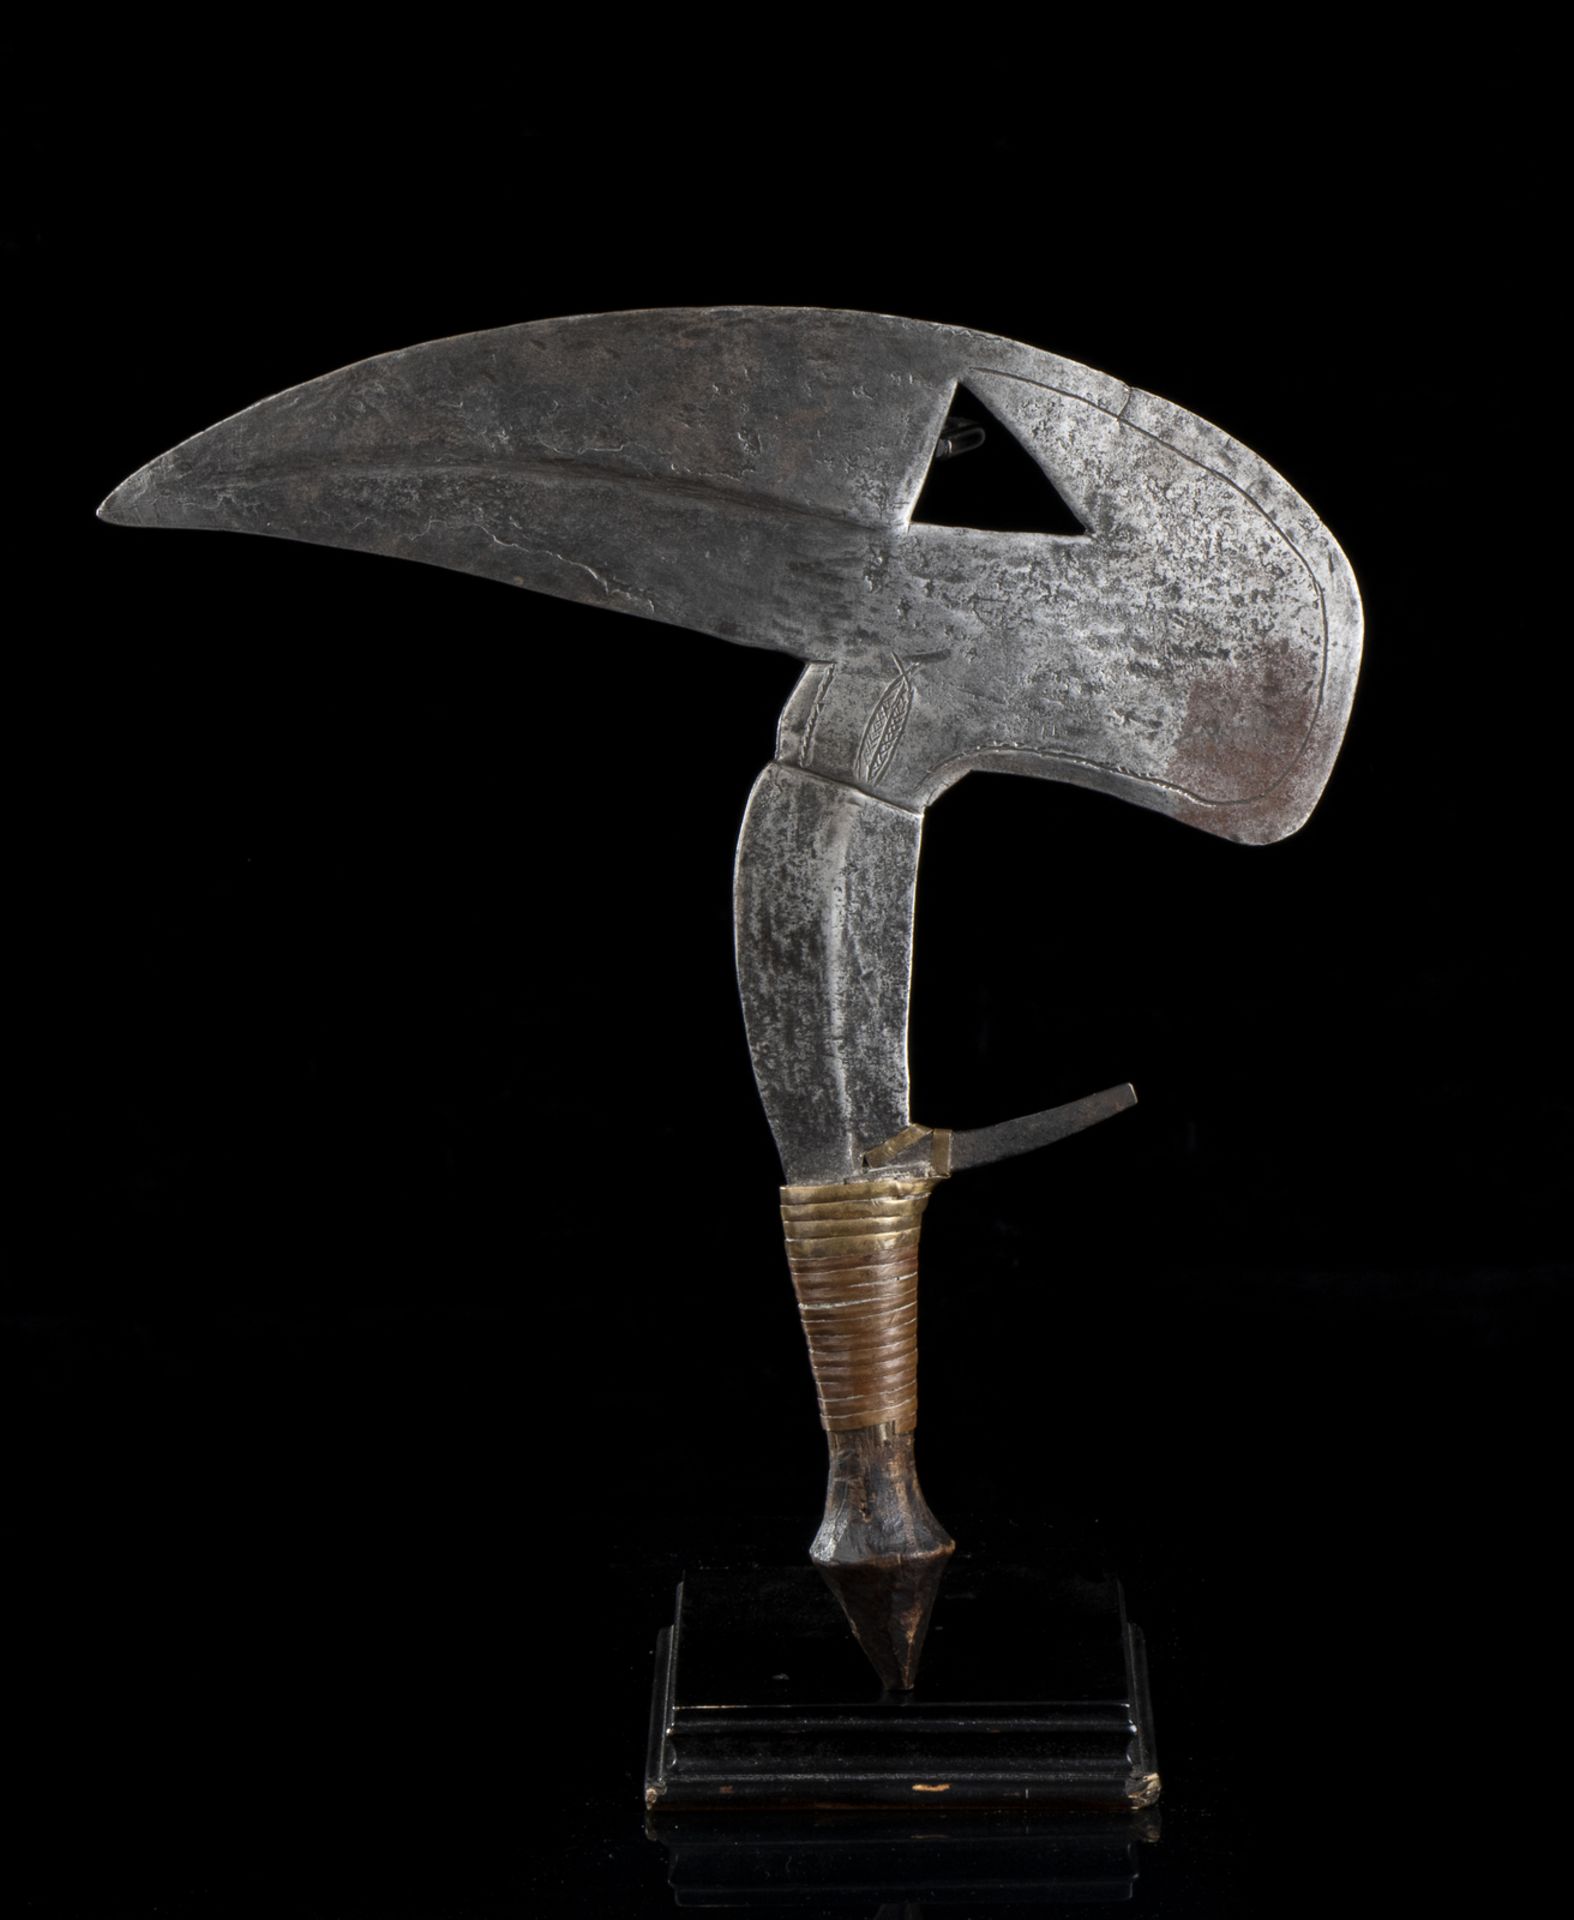 Gabon knife. Gabon, late 19th/early 20th century